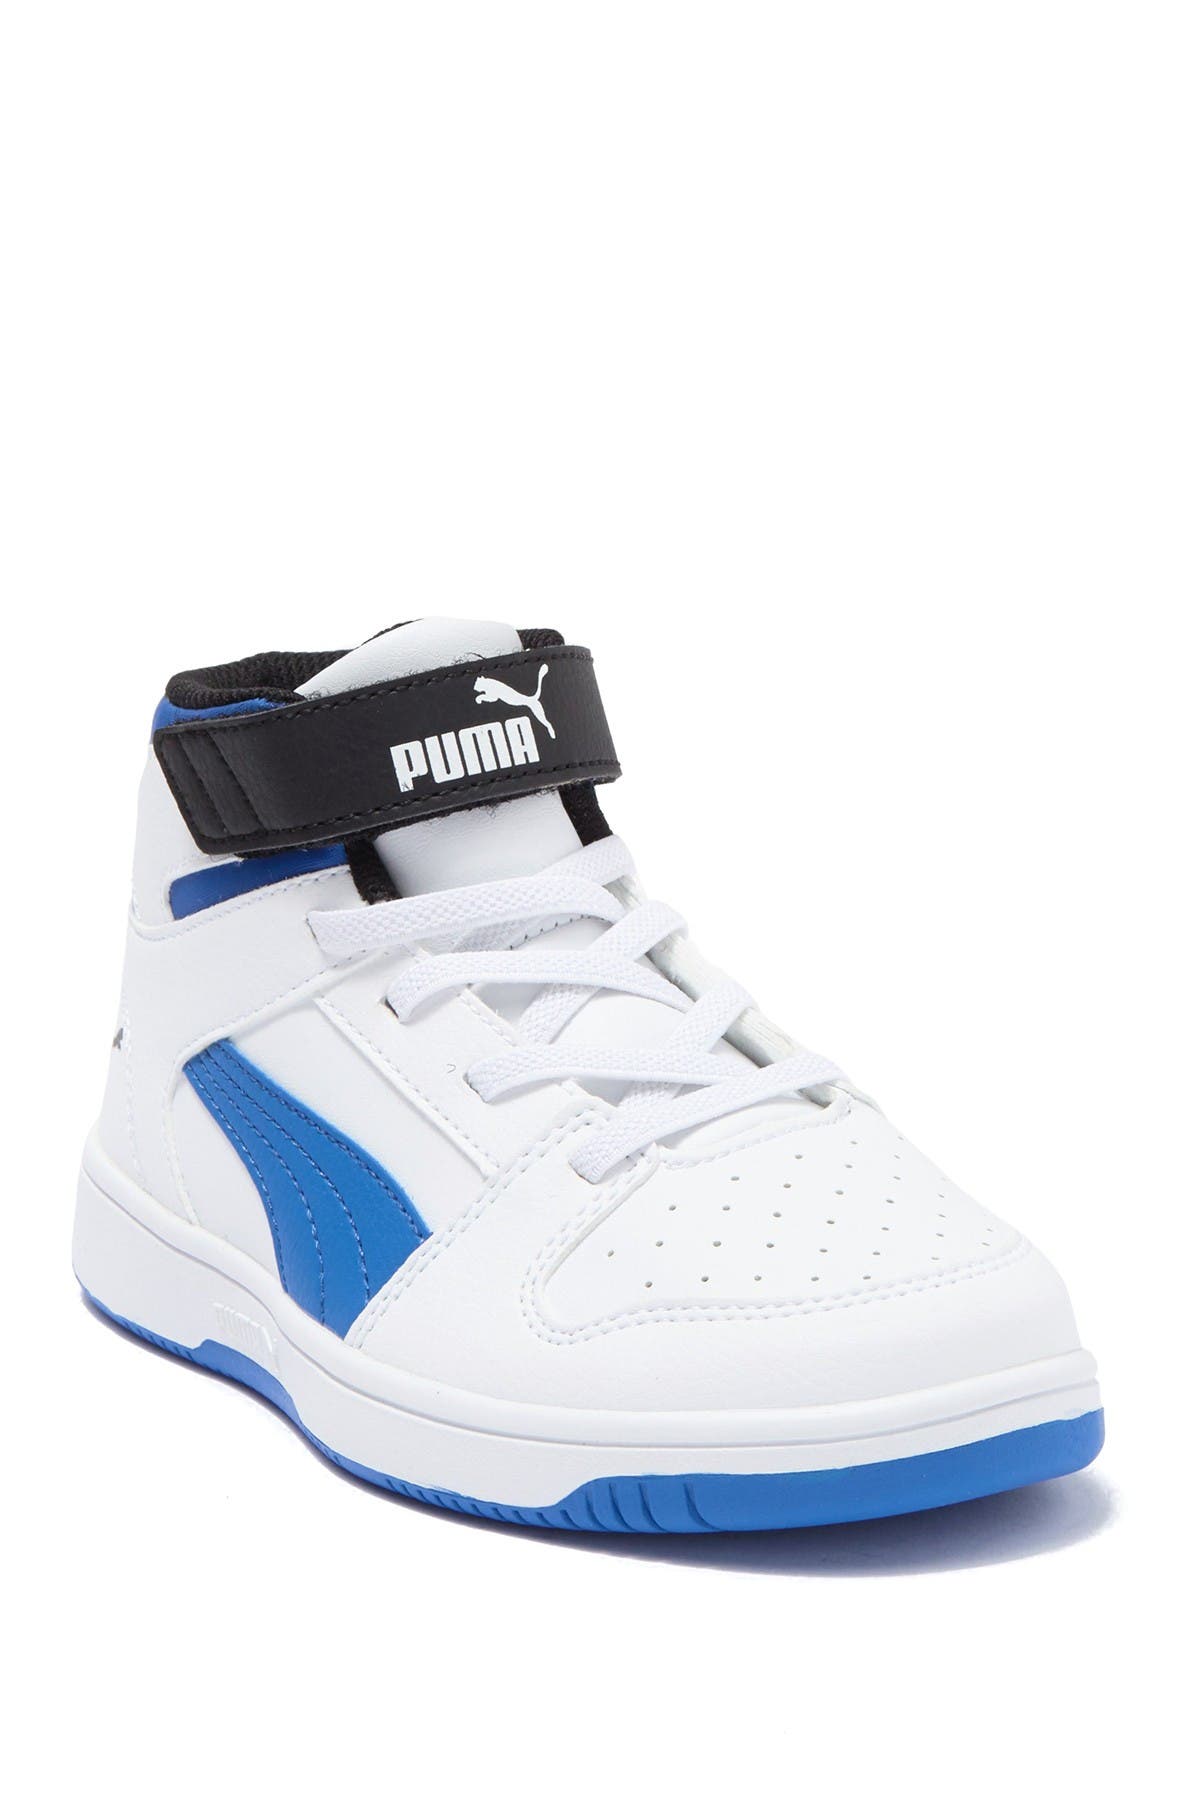 puma rebound layup sneakers